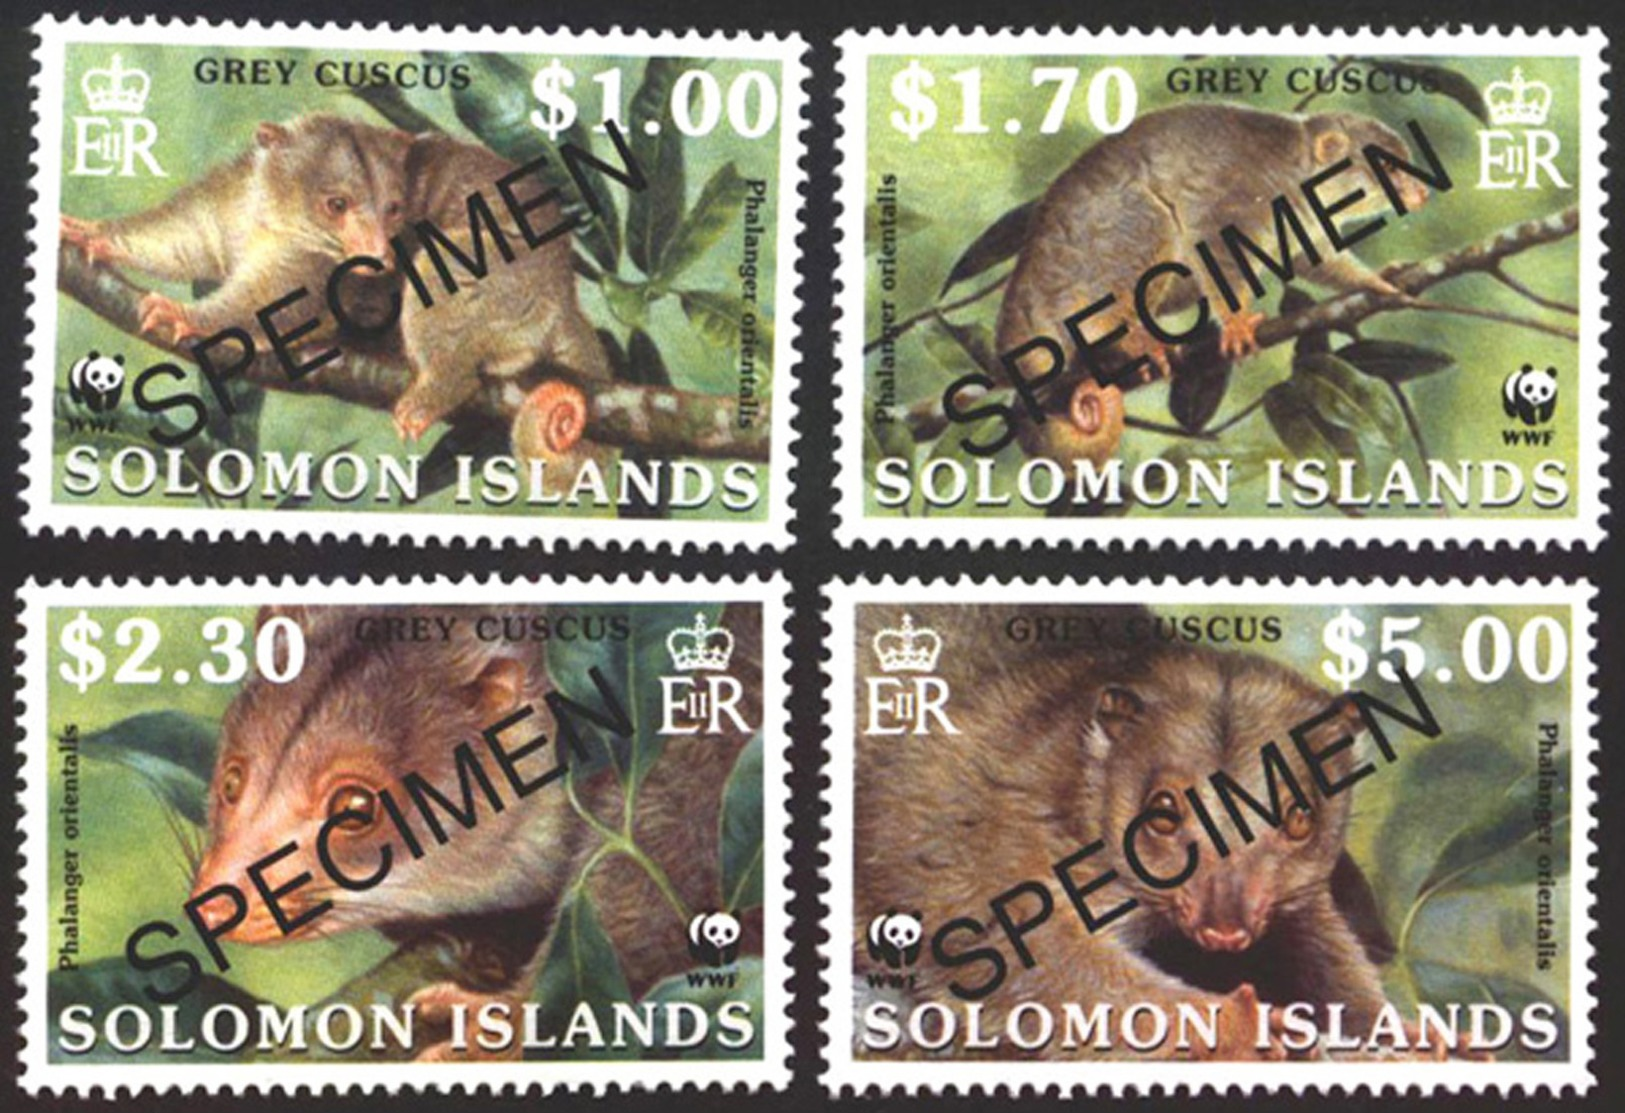 SOLOMON ISLANDS STAMPS, SET @F 4, FAUNA, WWF, SPECIMEN, MNH - Solomoneilanden (1978-...)